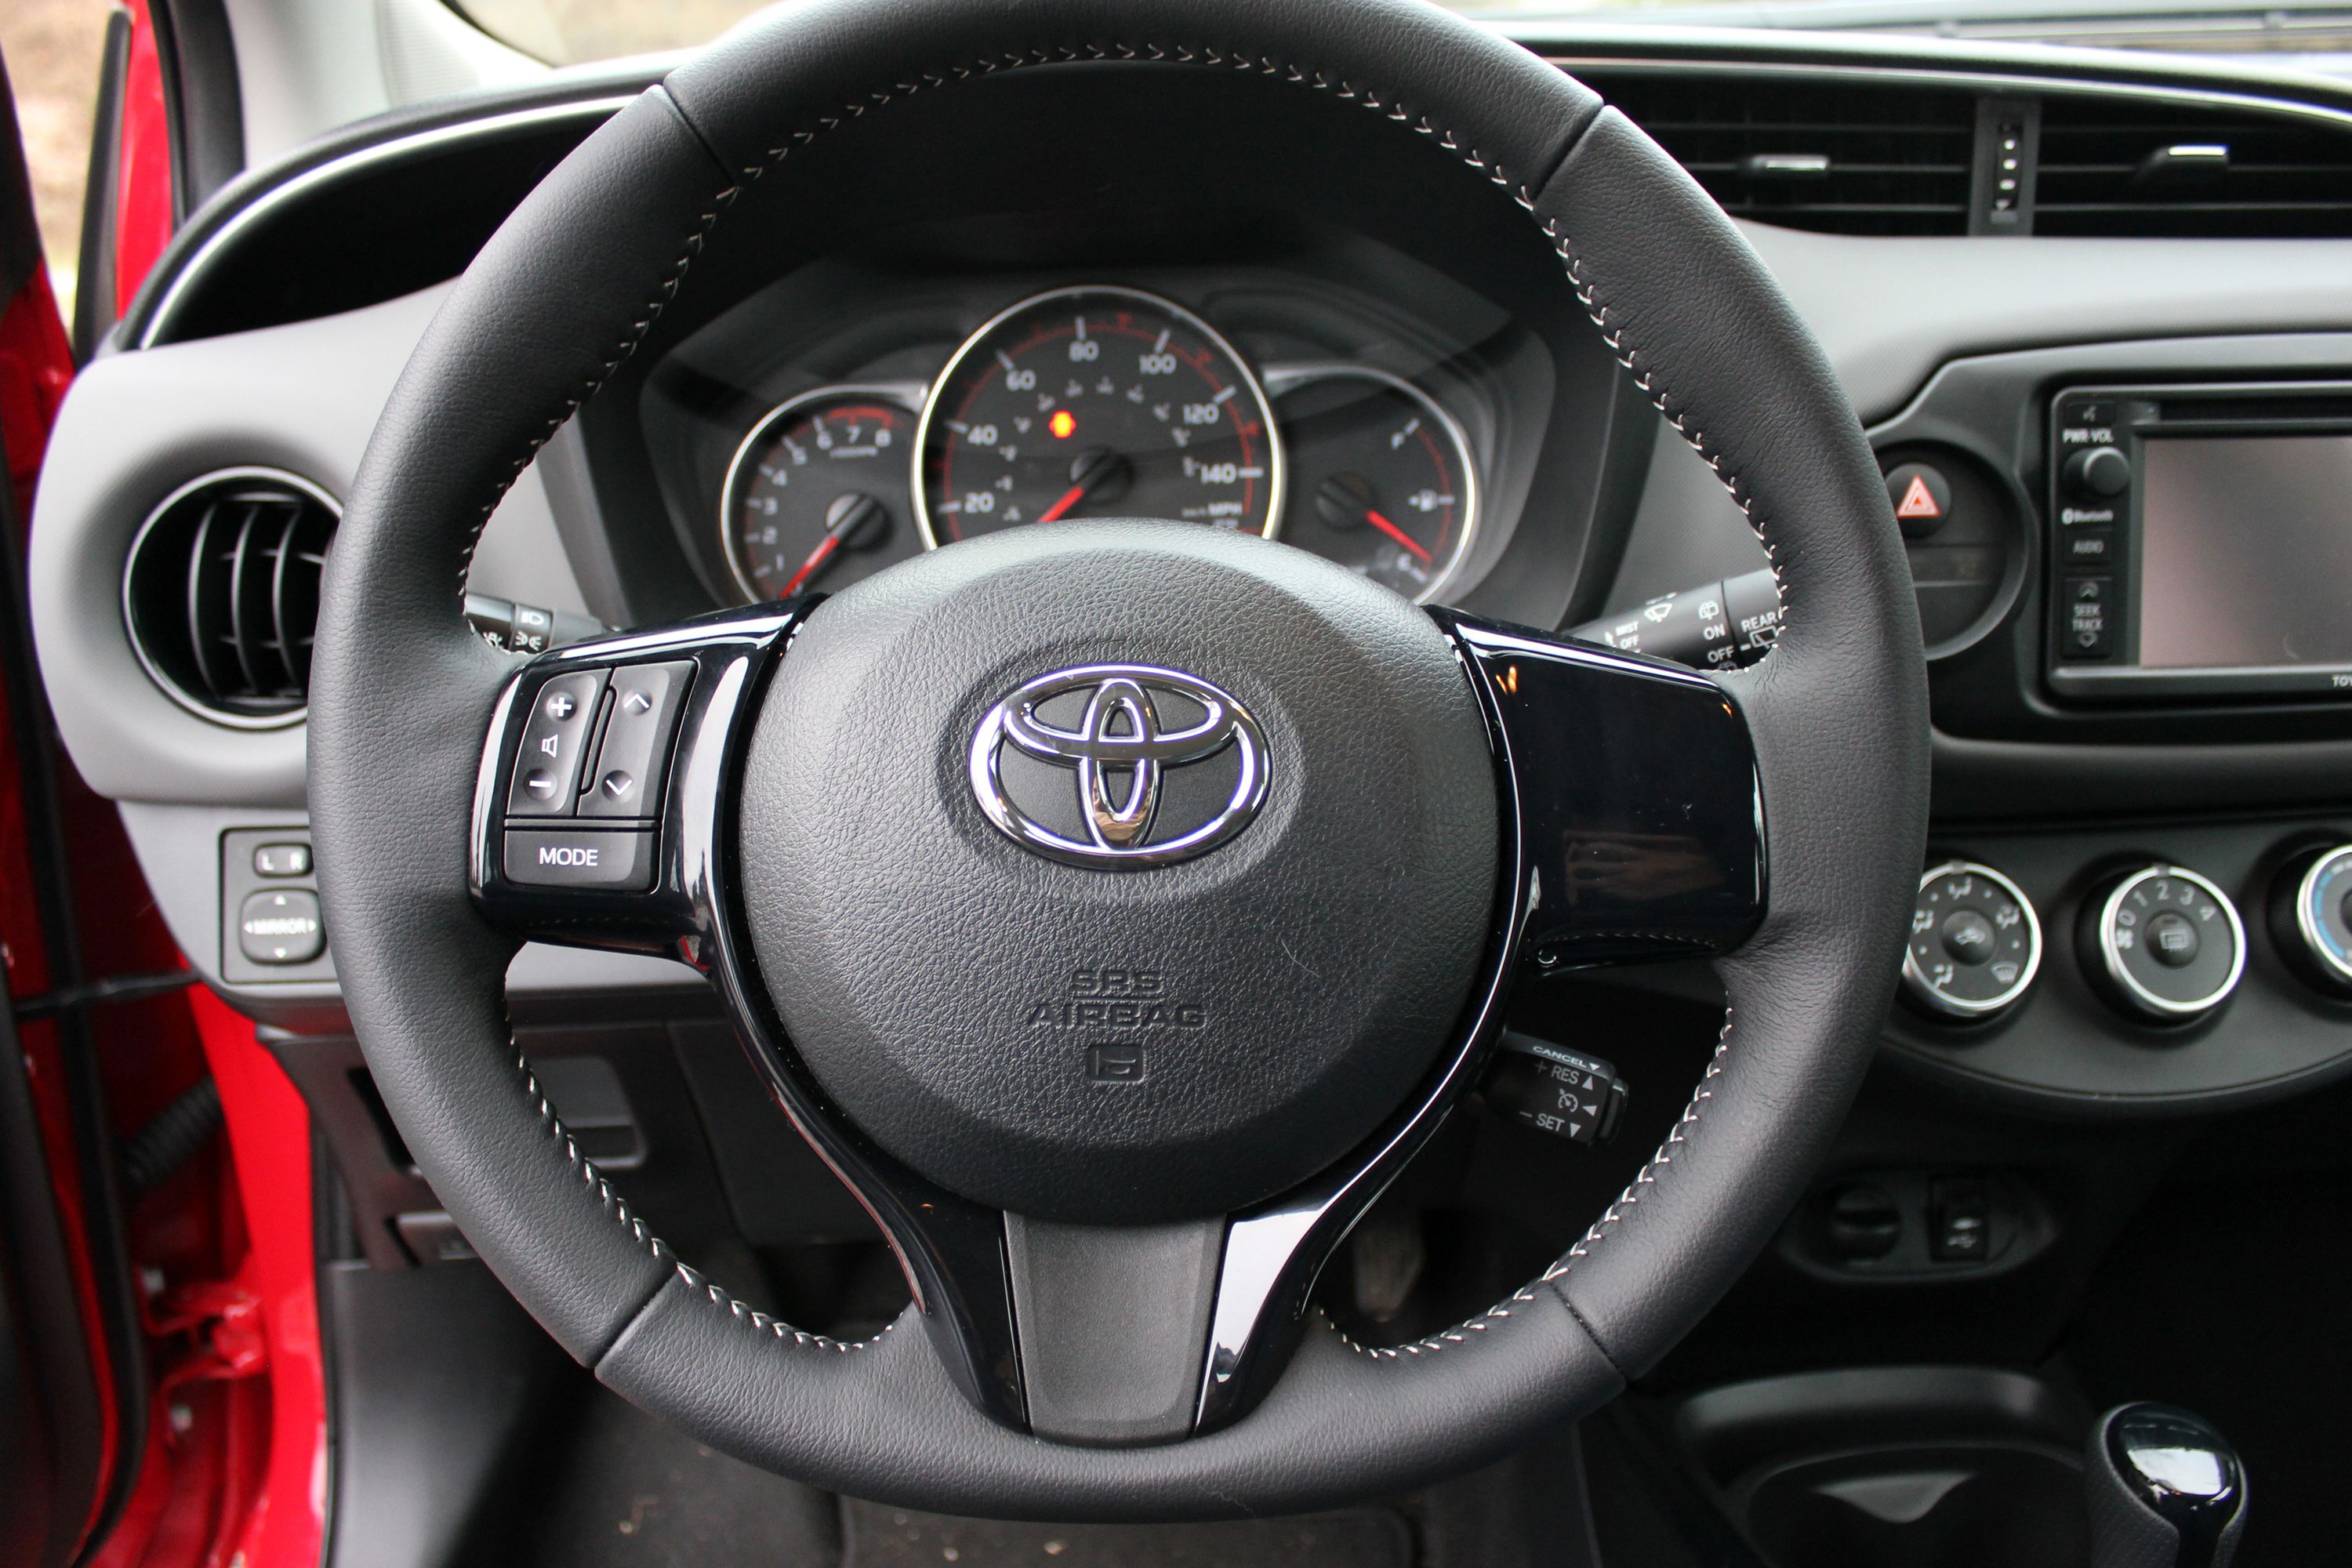 2015 Toyota Yaris - Driven